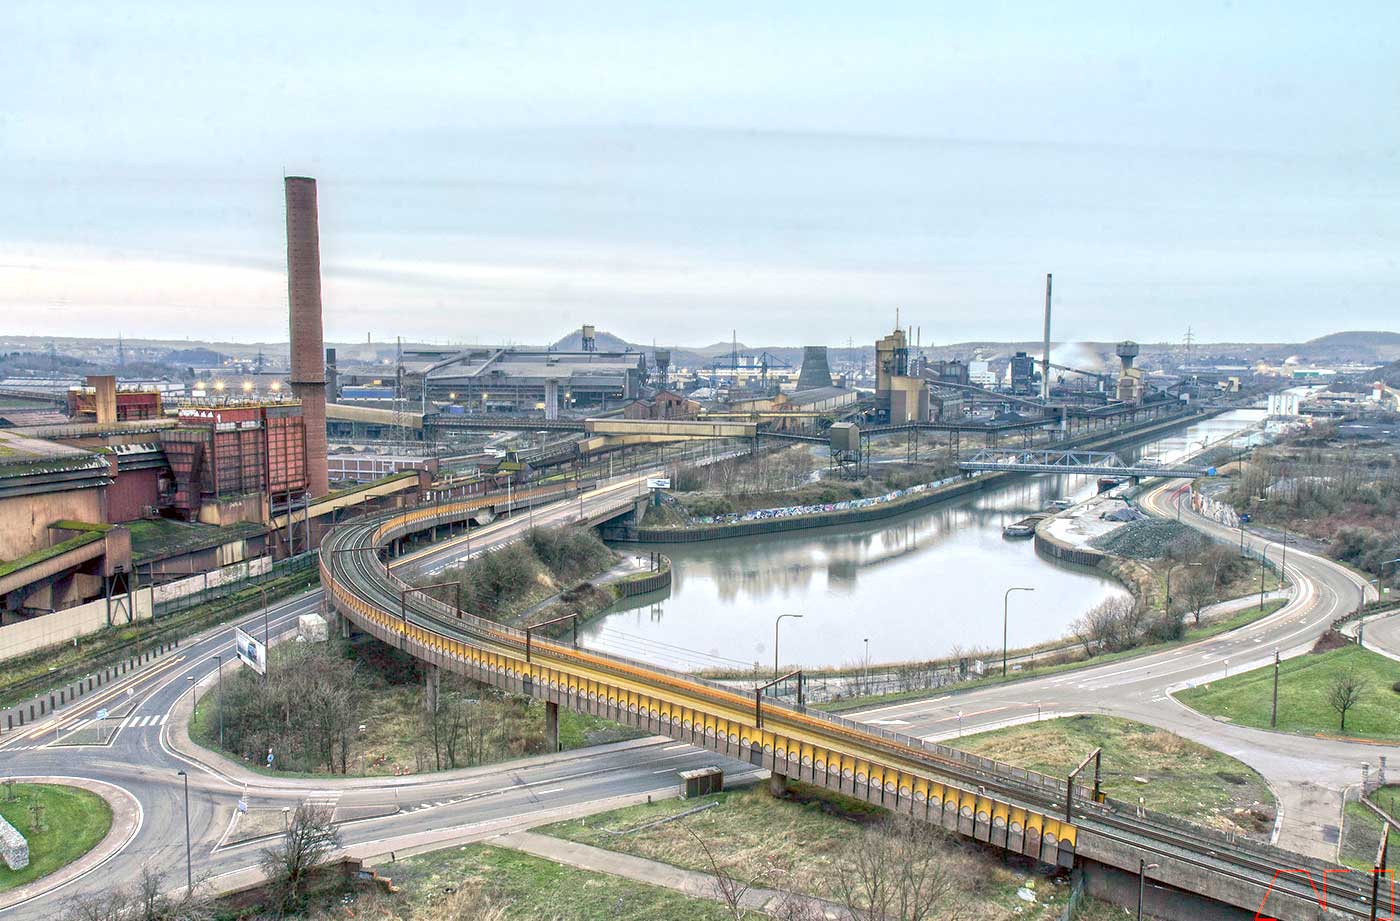 Charleroi Industrial Legacy